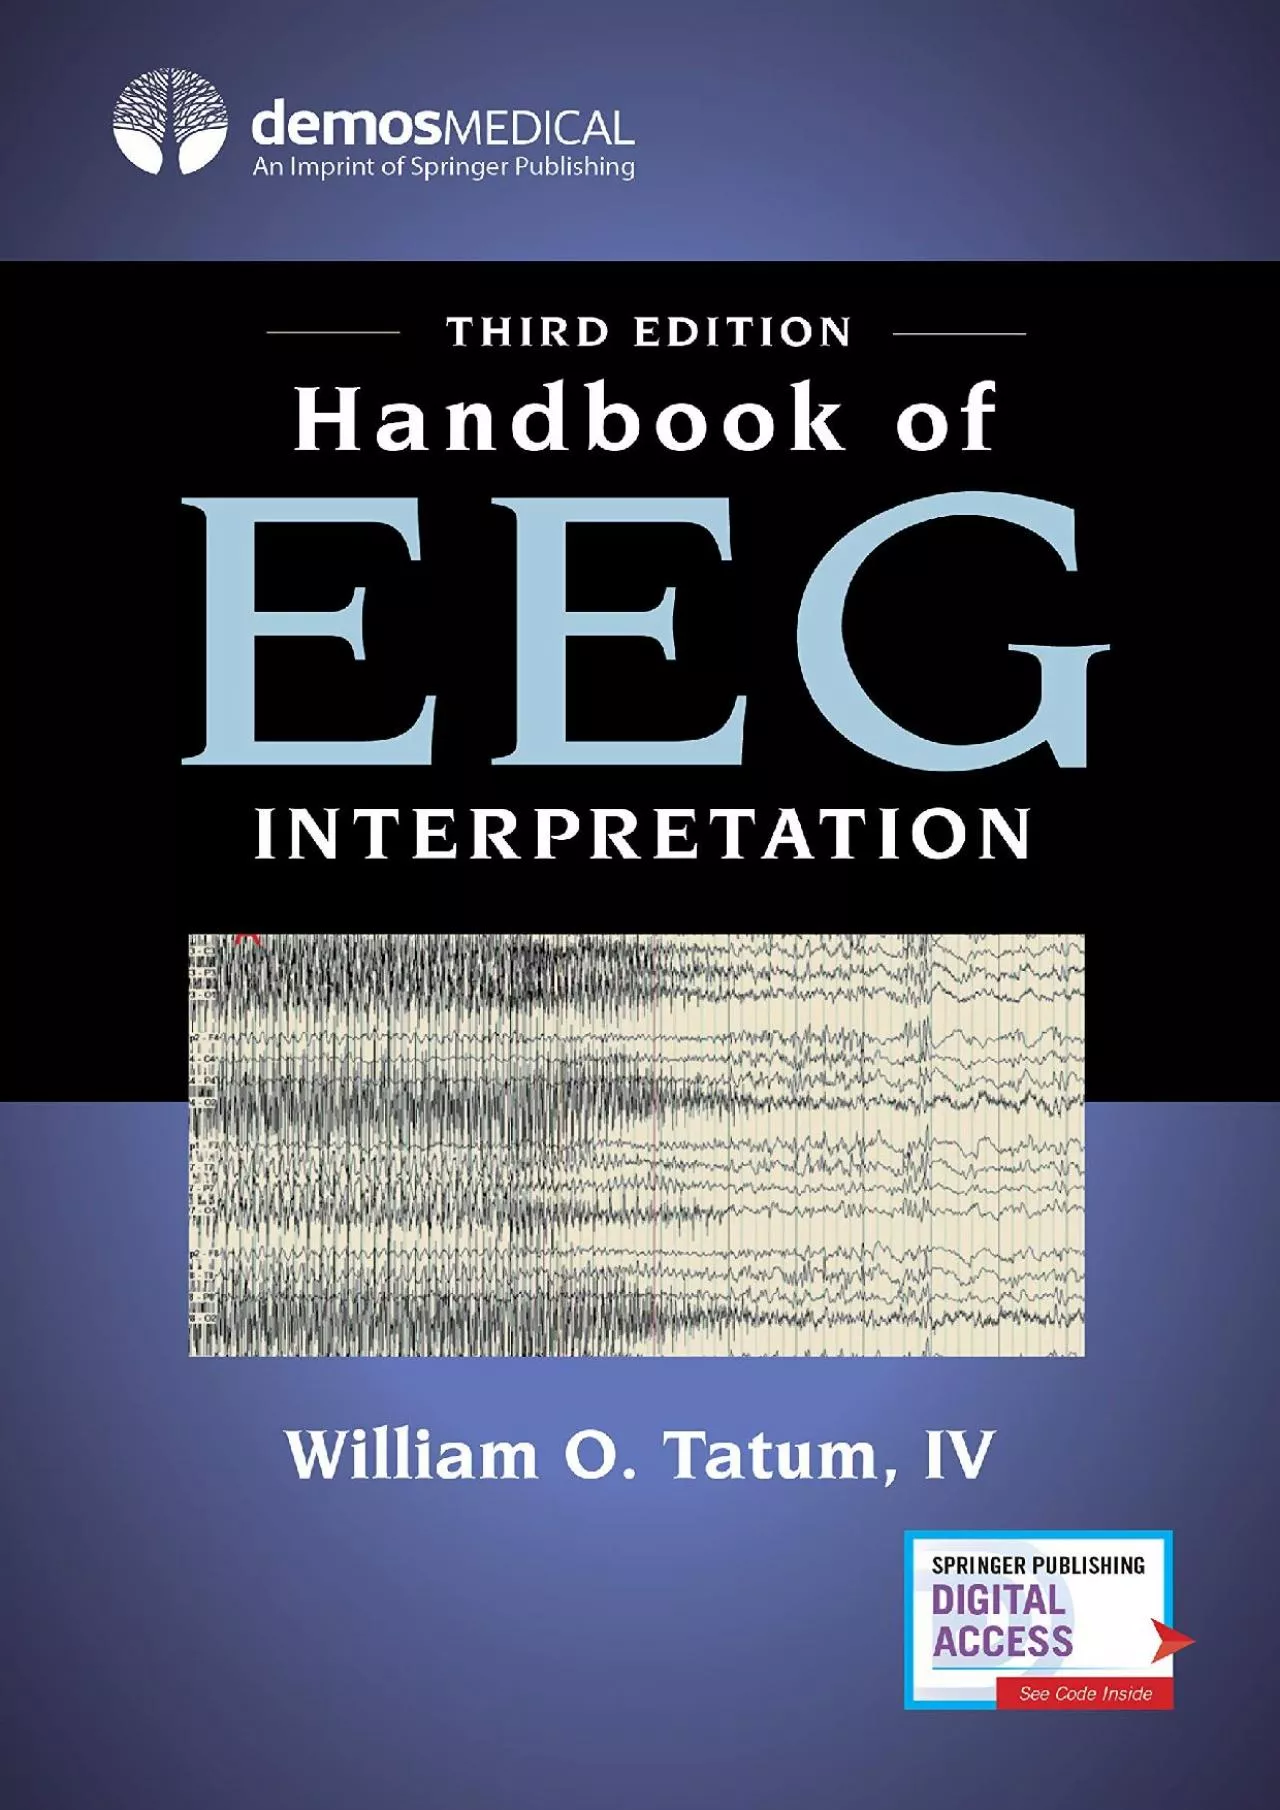 (BOOK)-Handbook of EEG Interpretation, Third Edition – A Comprehensive EEG Book for